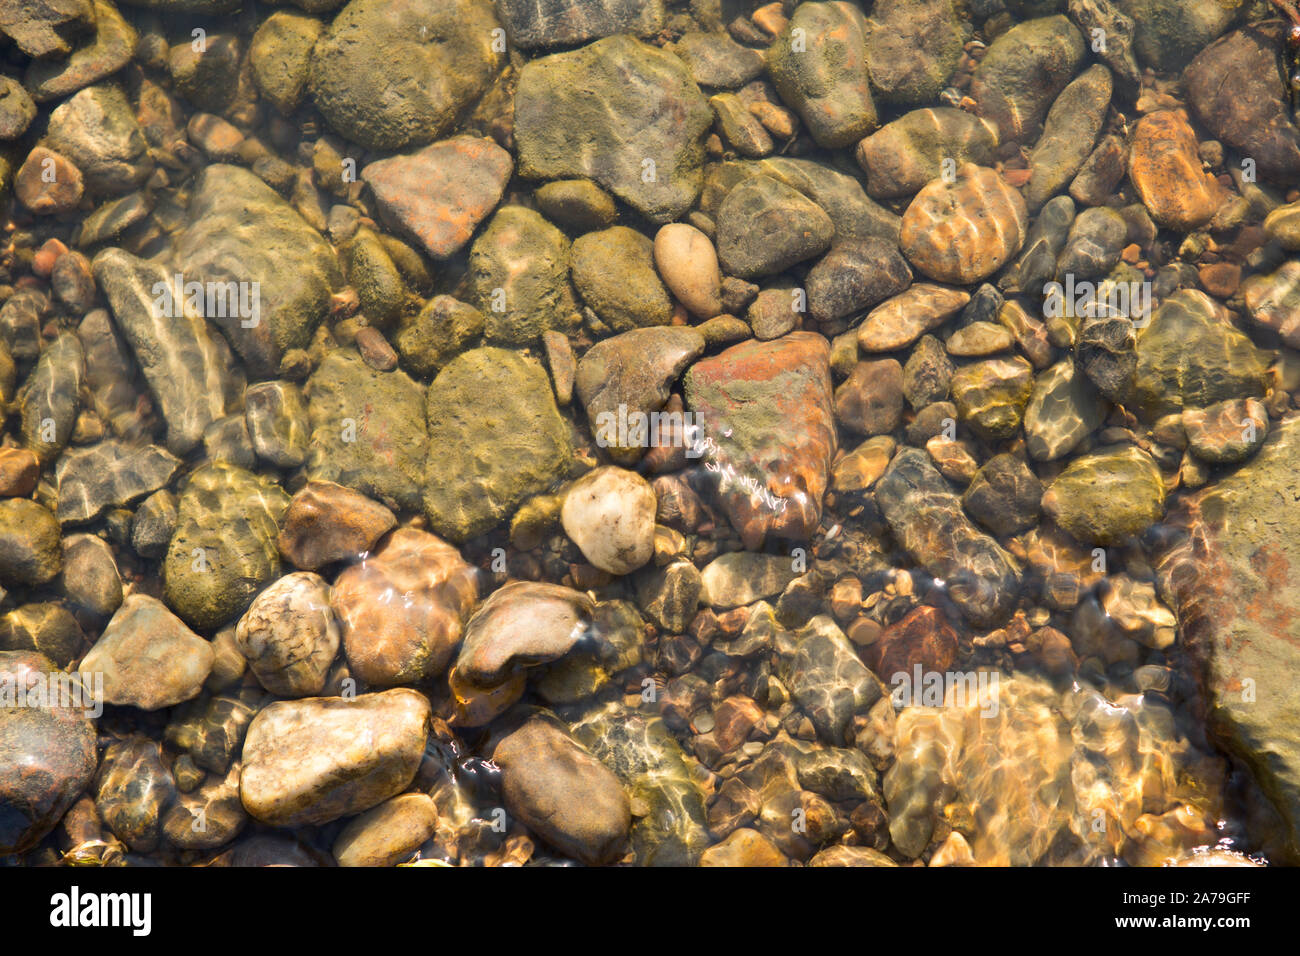 River pebble for aquarium bottom Stock Photo - Alamy